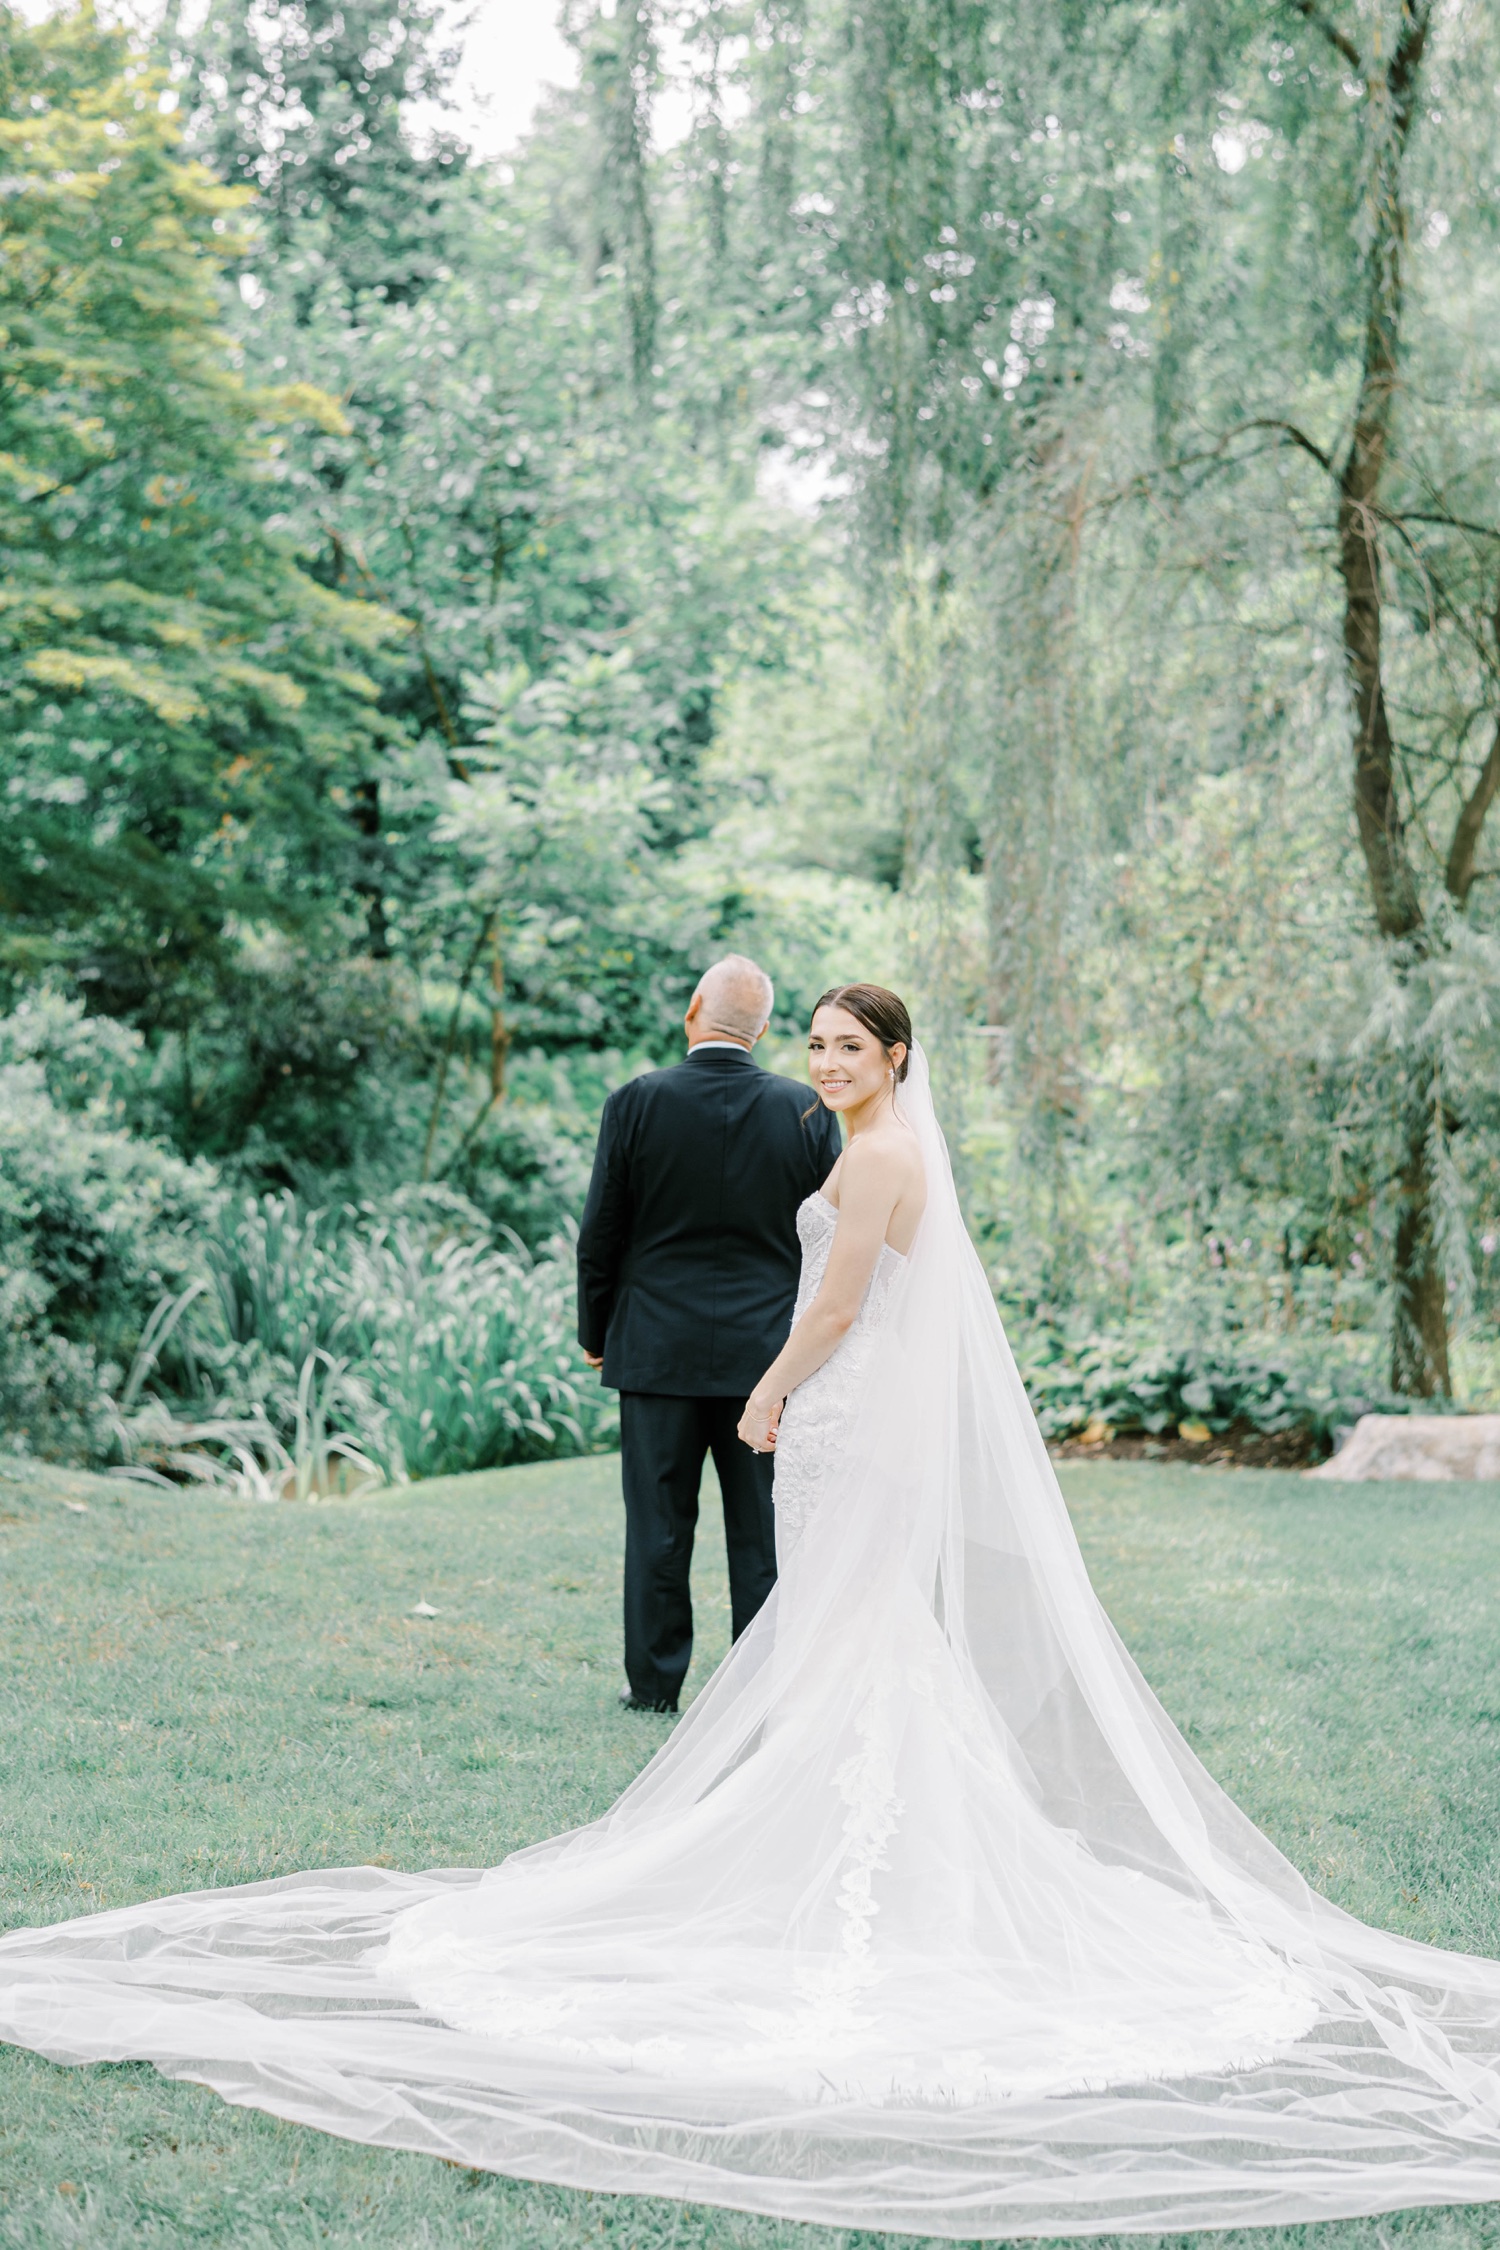 Appleford Estate Summer Wedding | Philadelphia Wedding Photographer